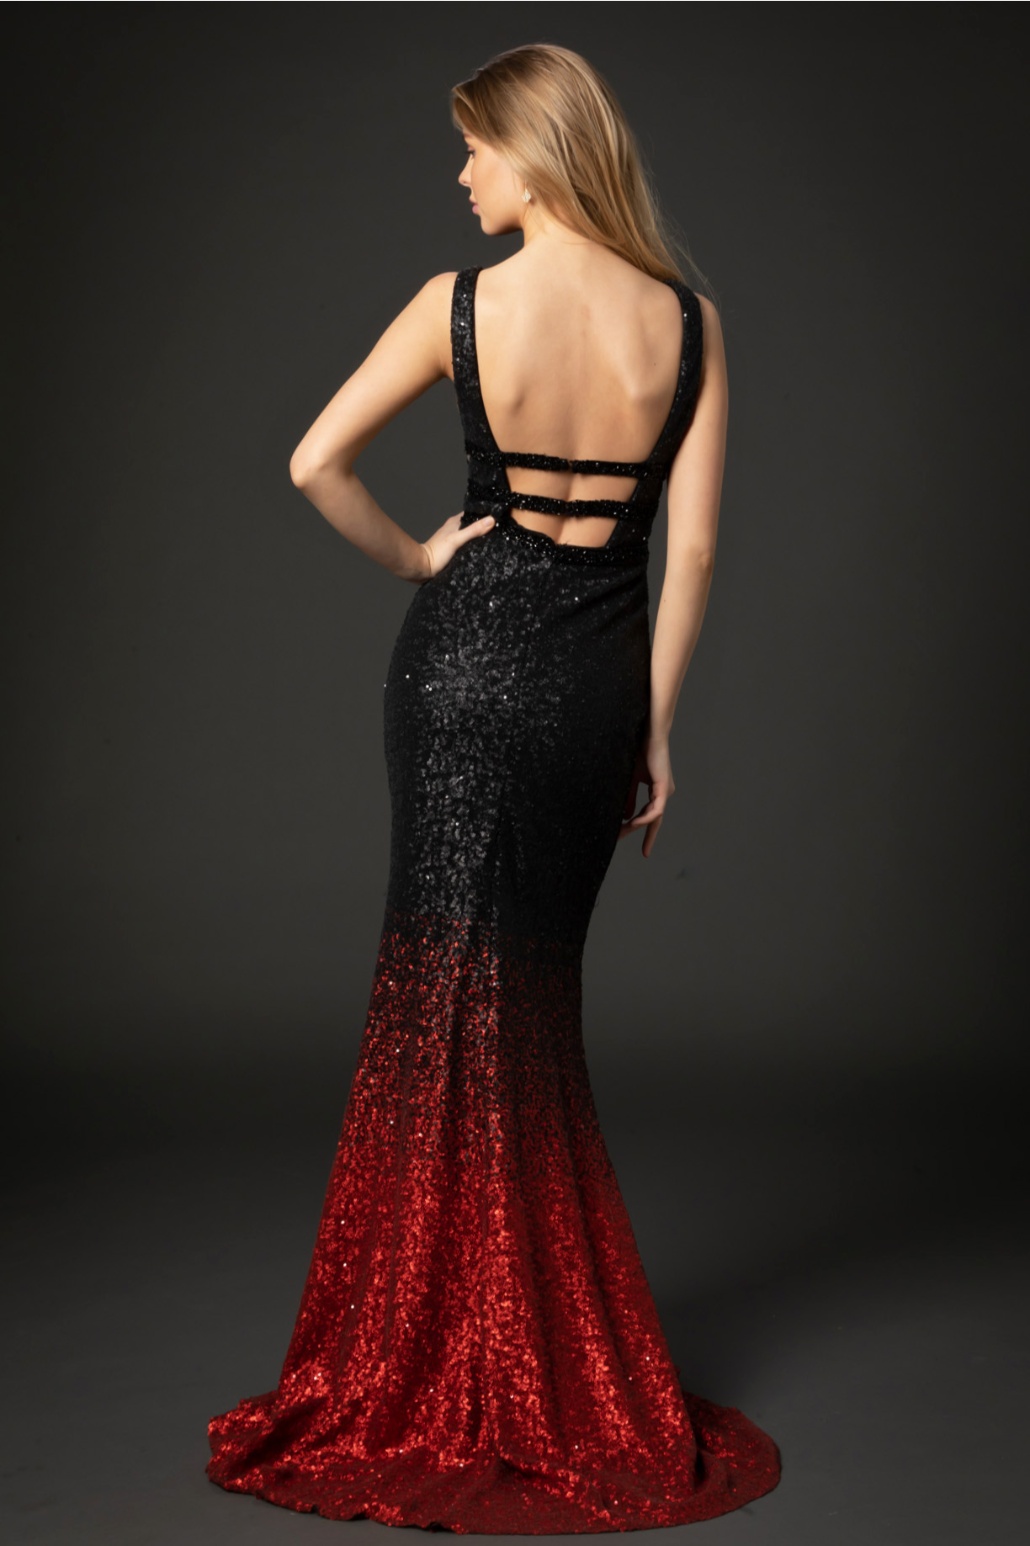 red black dress